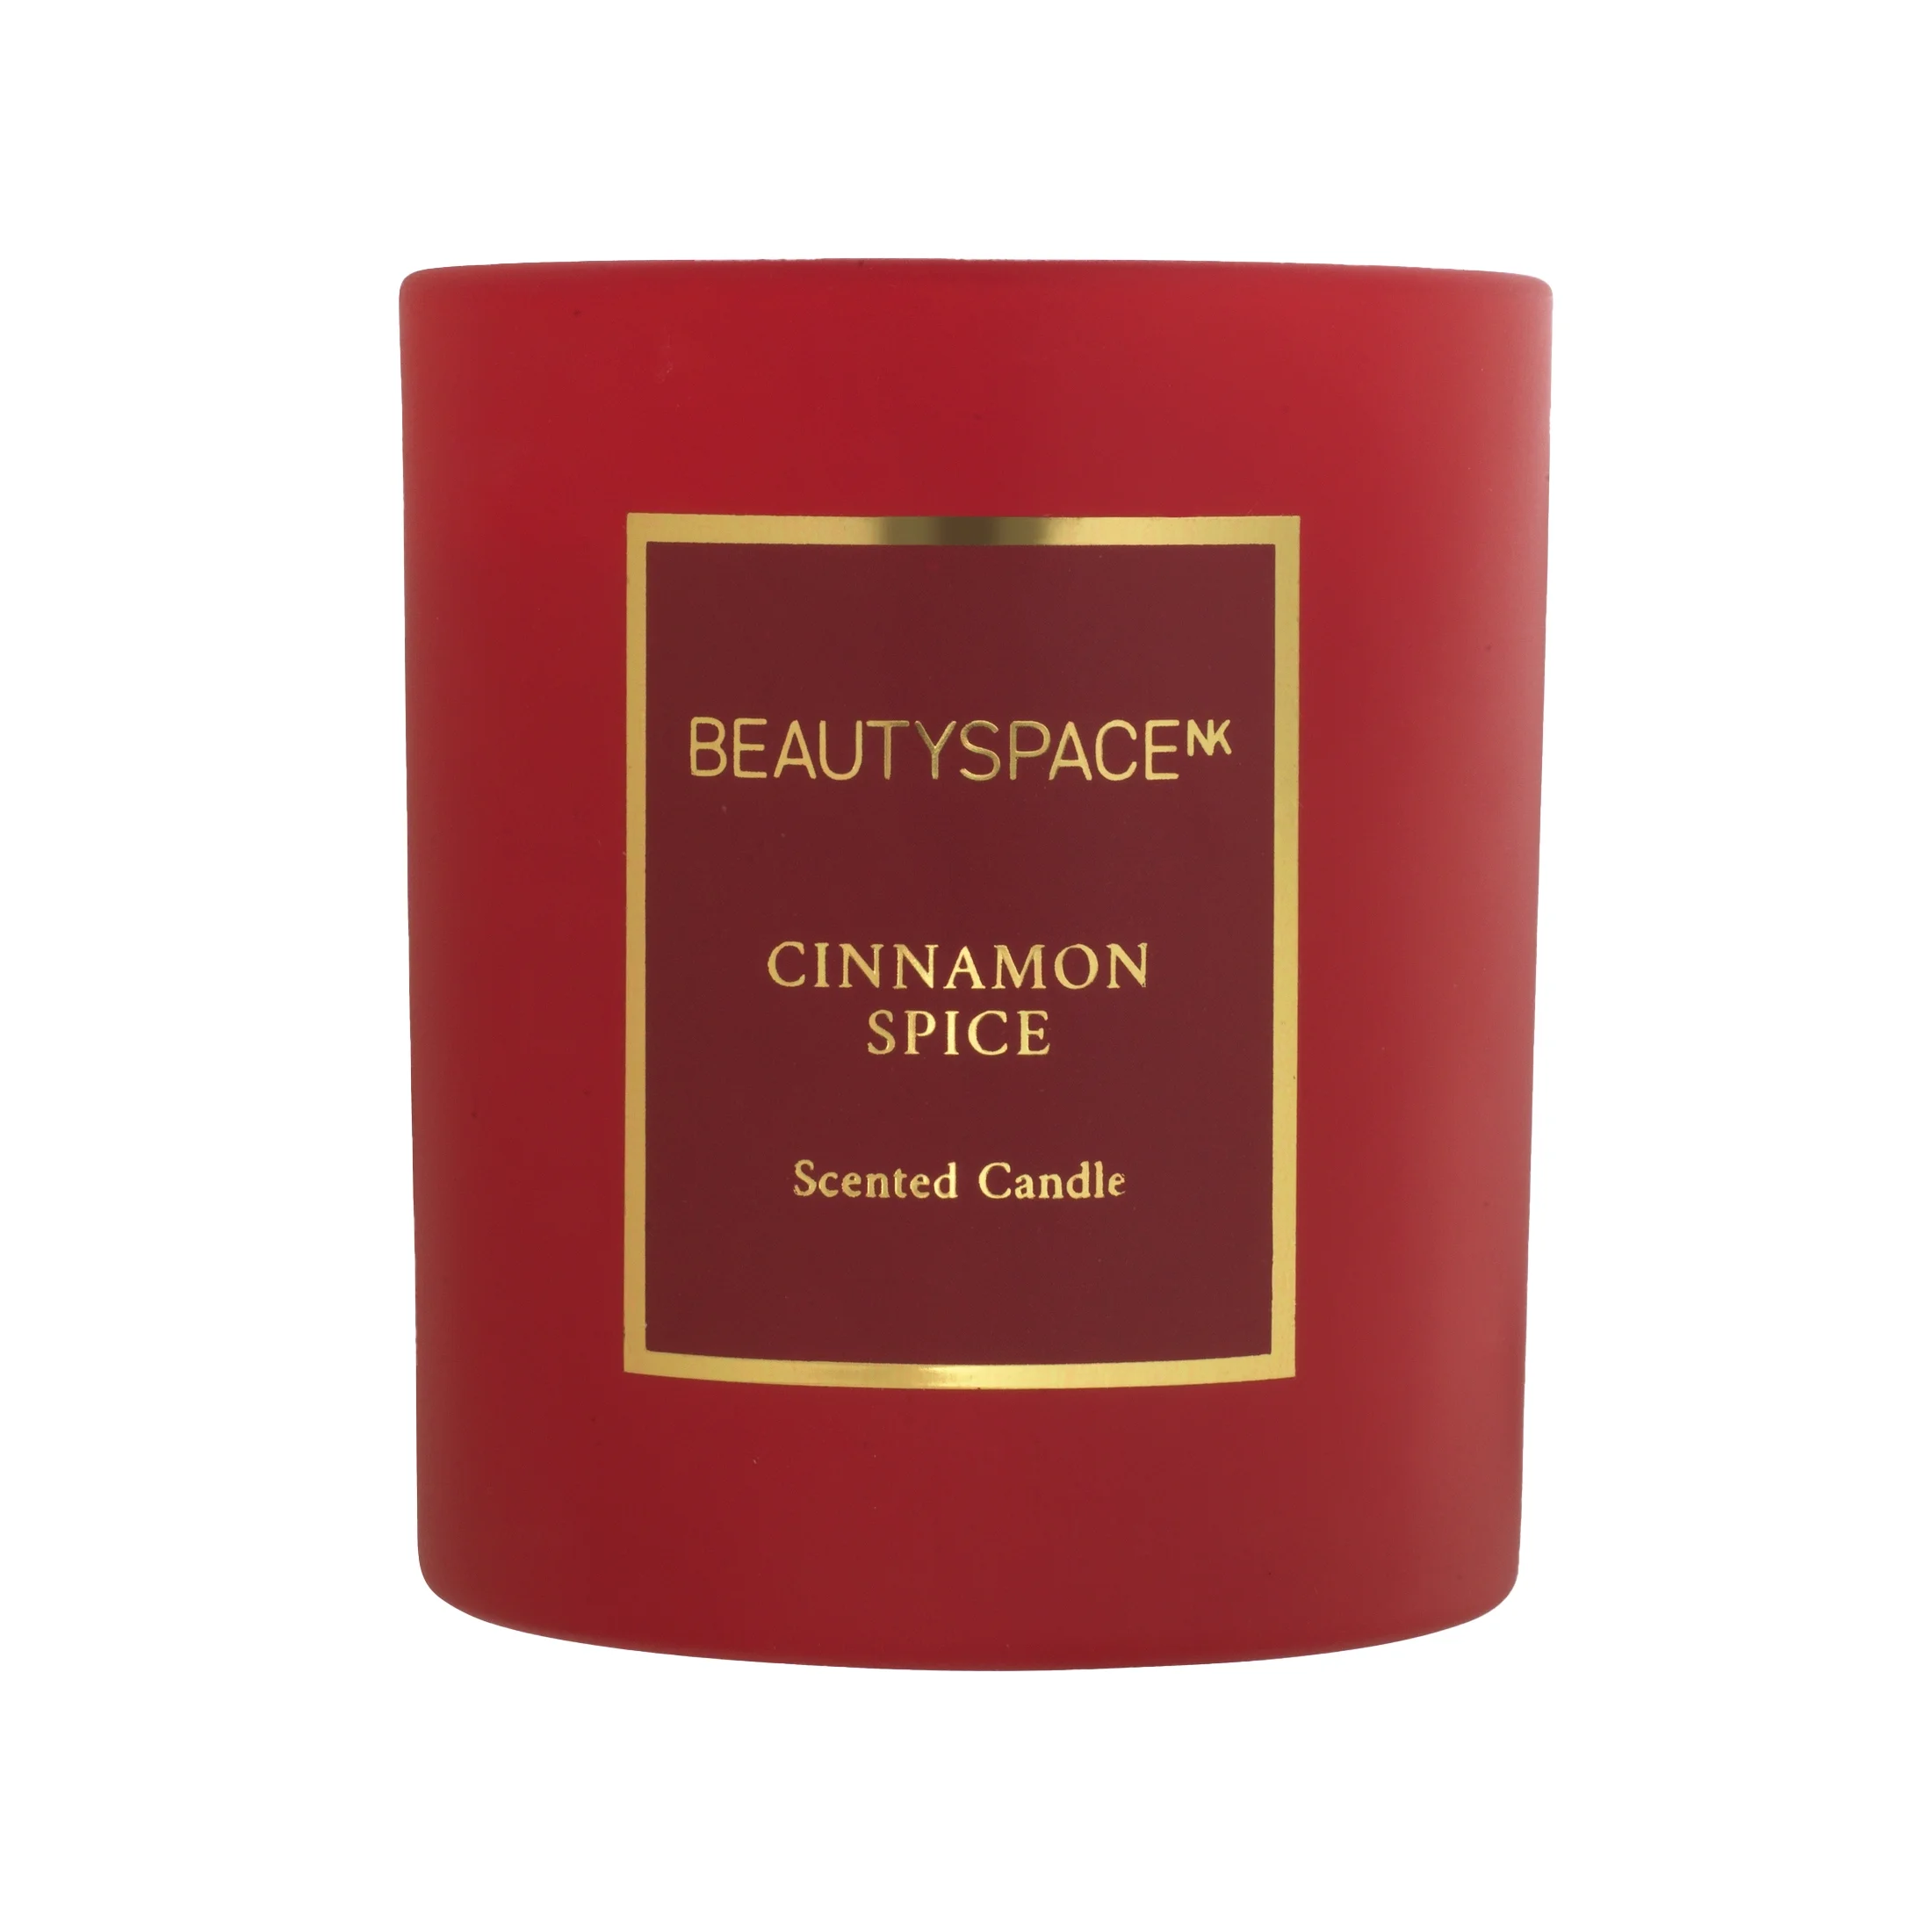 BeautyspaceNK Cinnamon Spice Candle, 200g